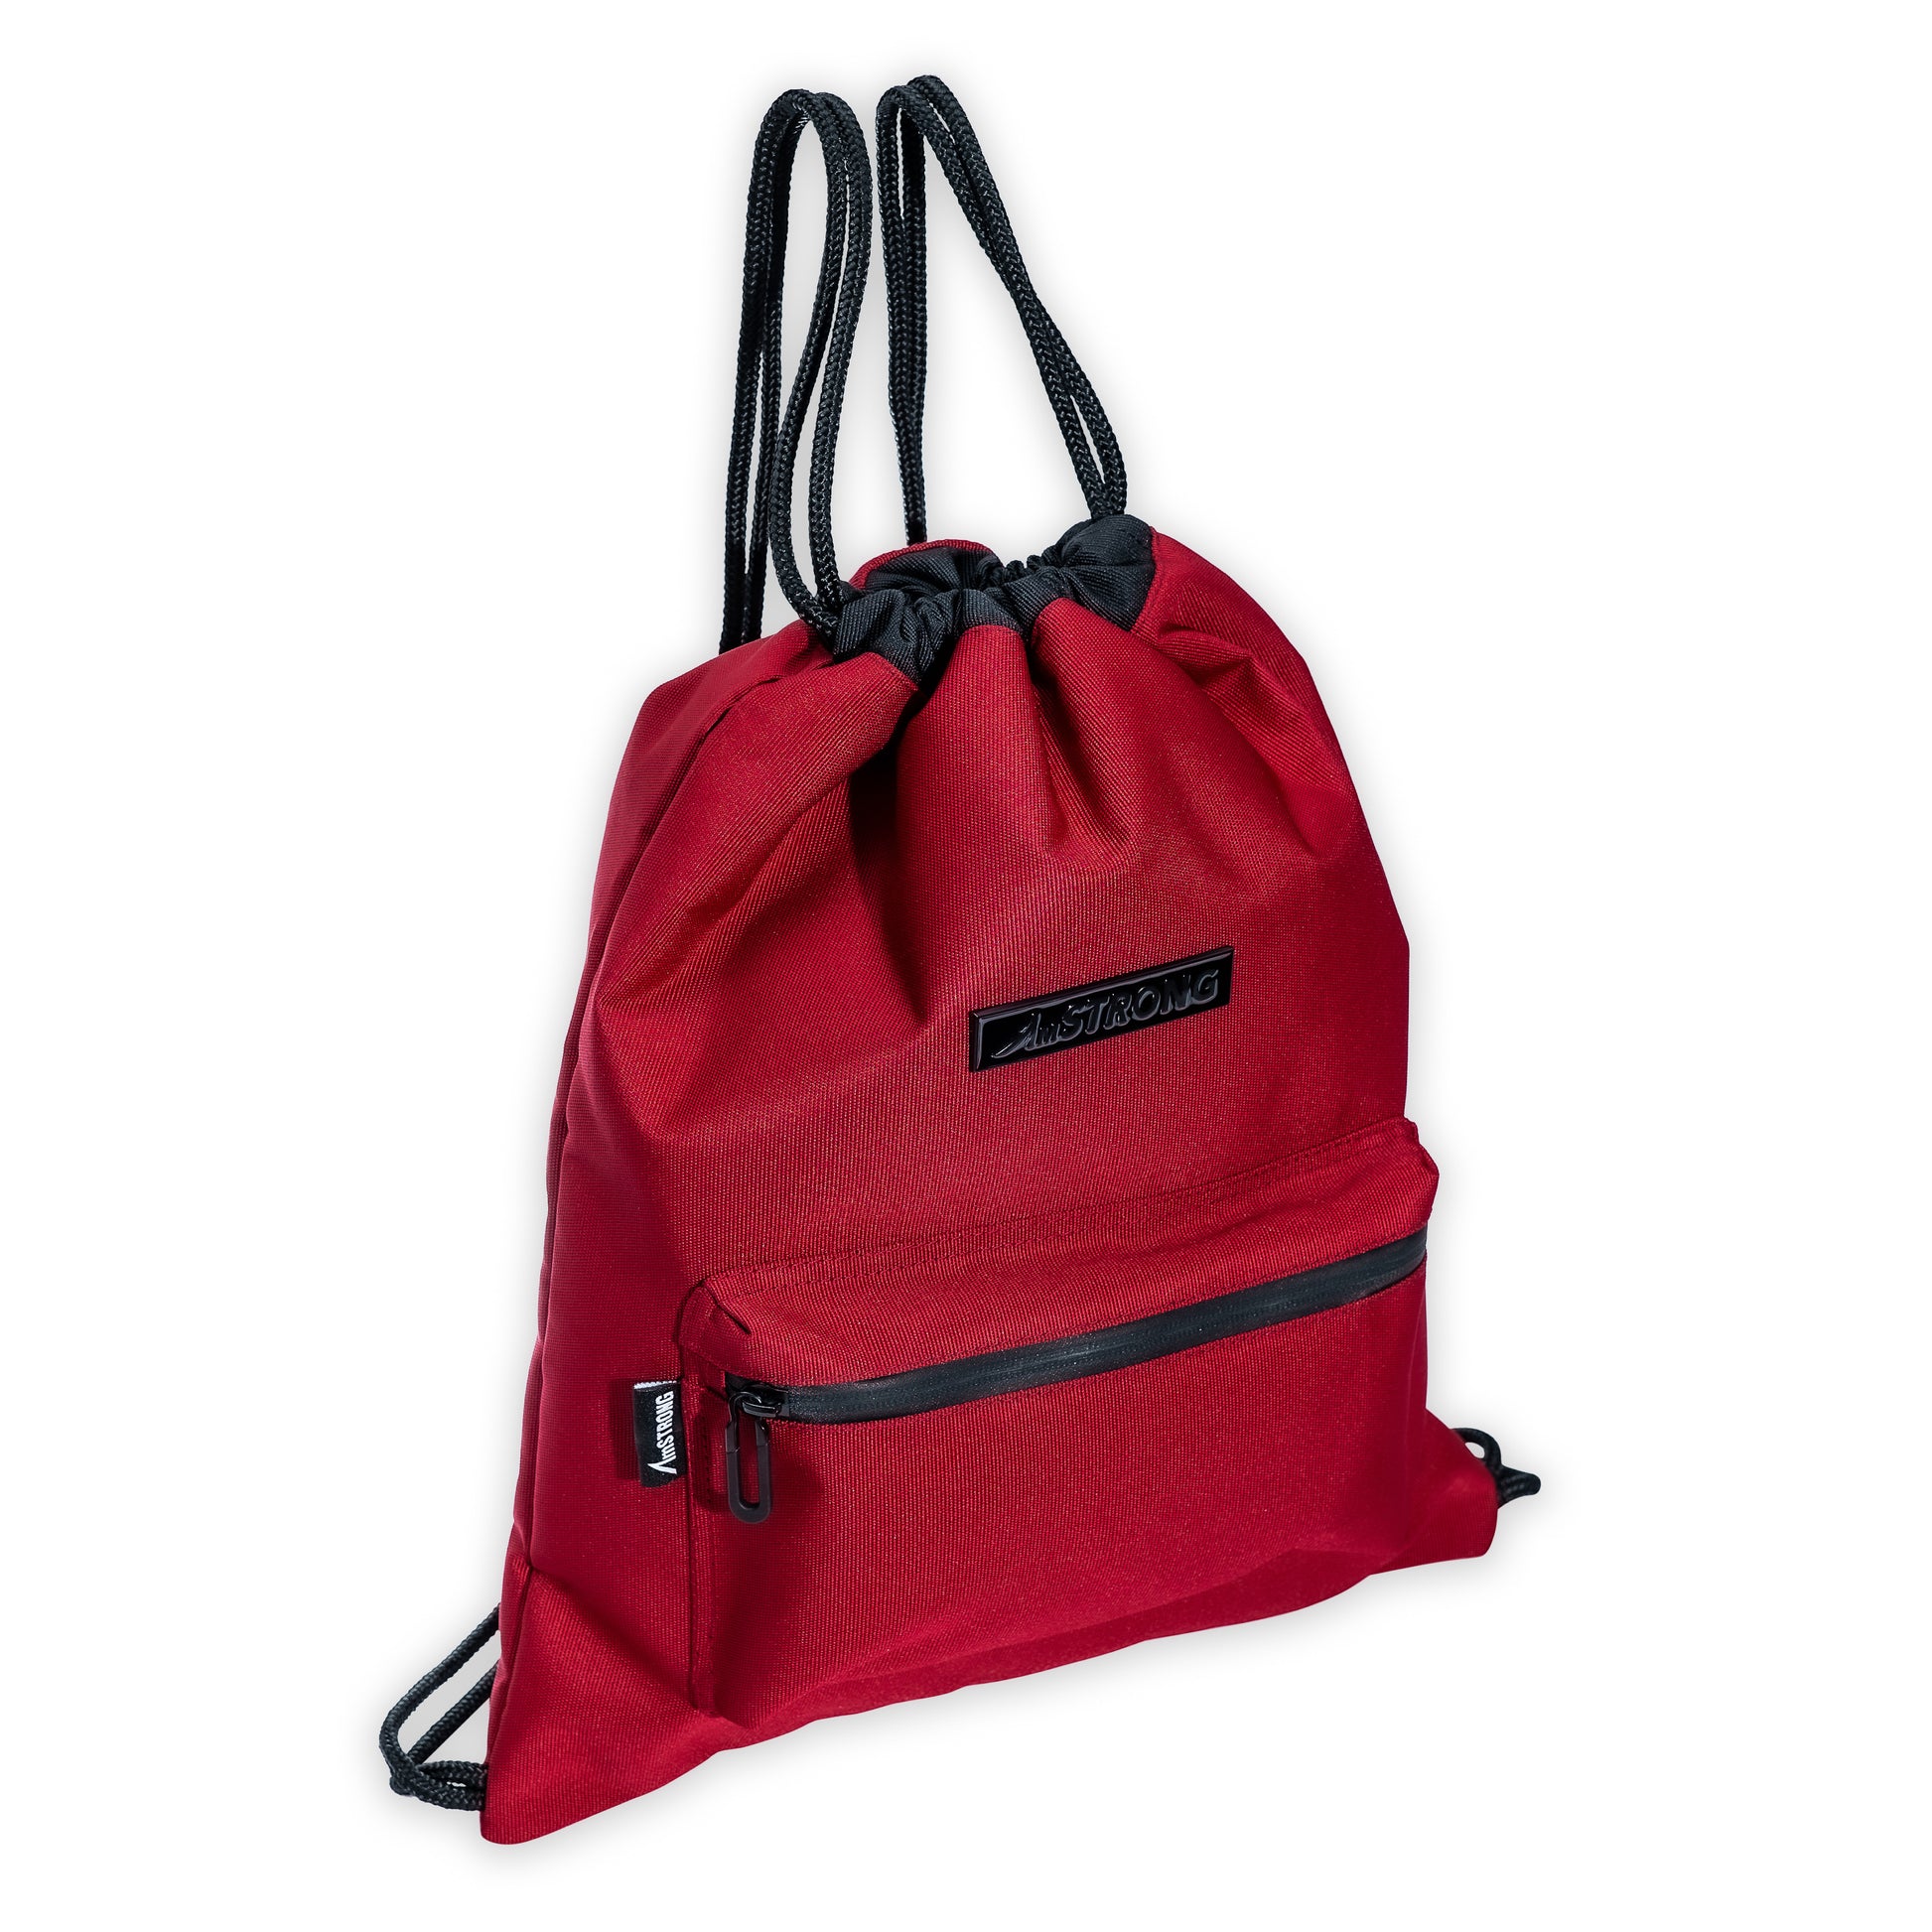 red drawstring bag with black trims